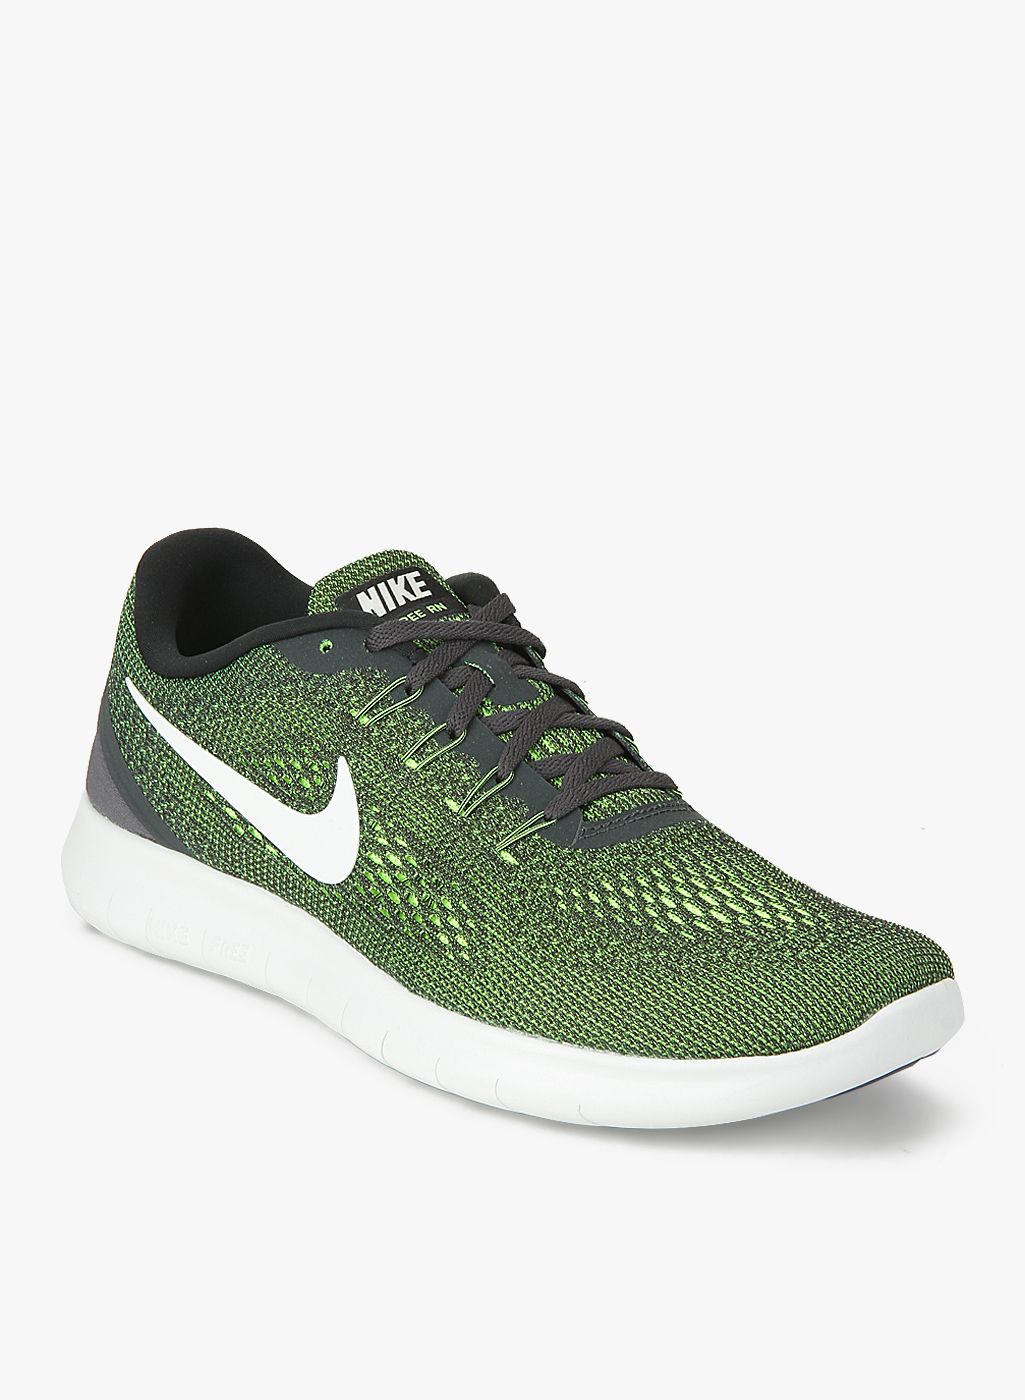 Buy Nike Free Rn Olive Running Shoes Online - 3714868 - Jabong